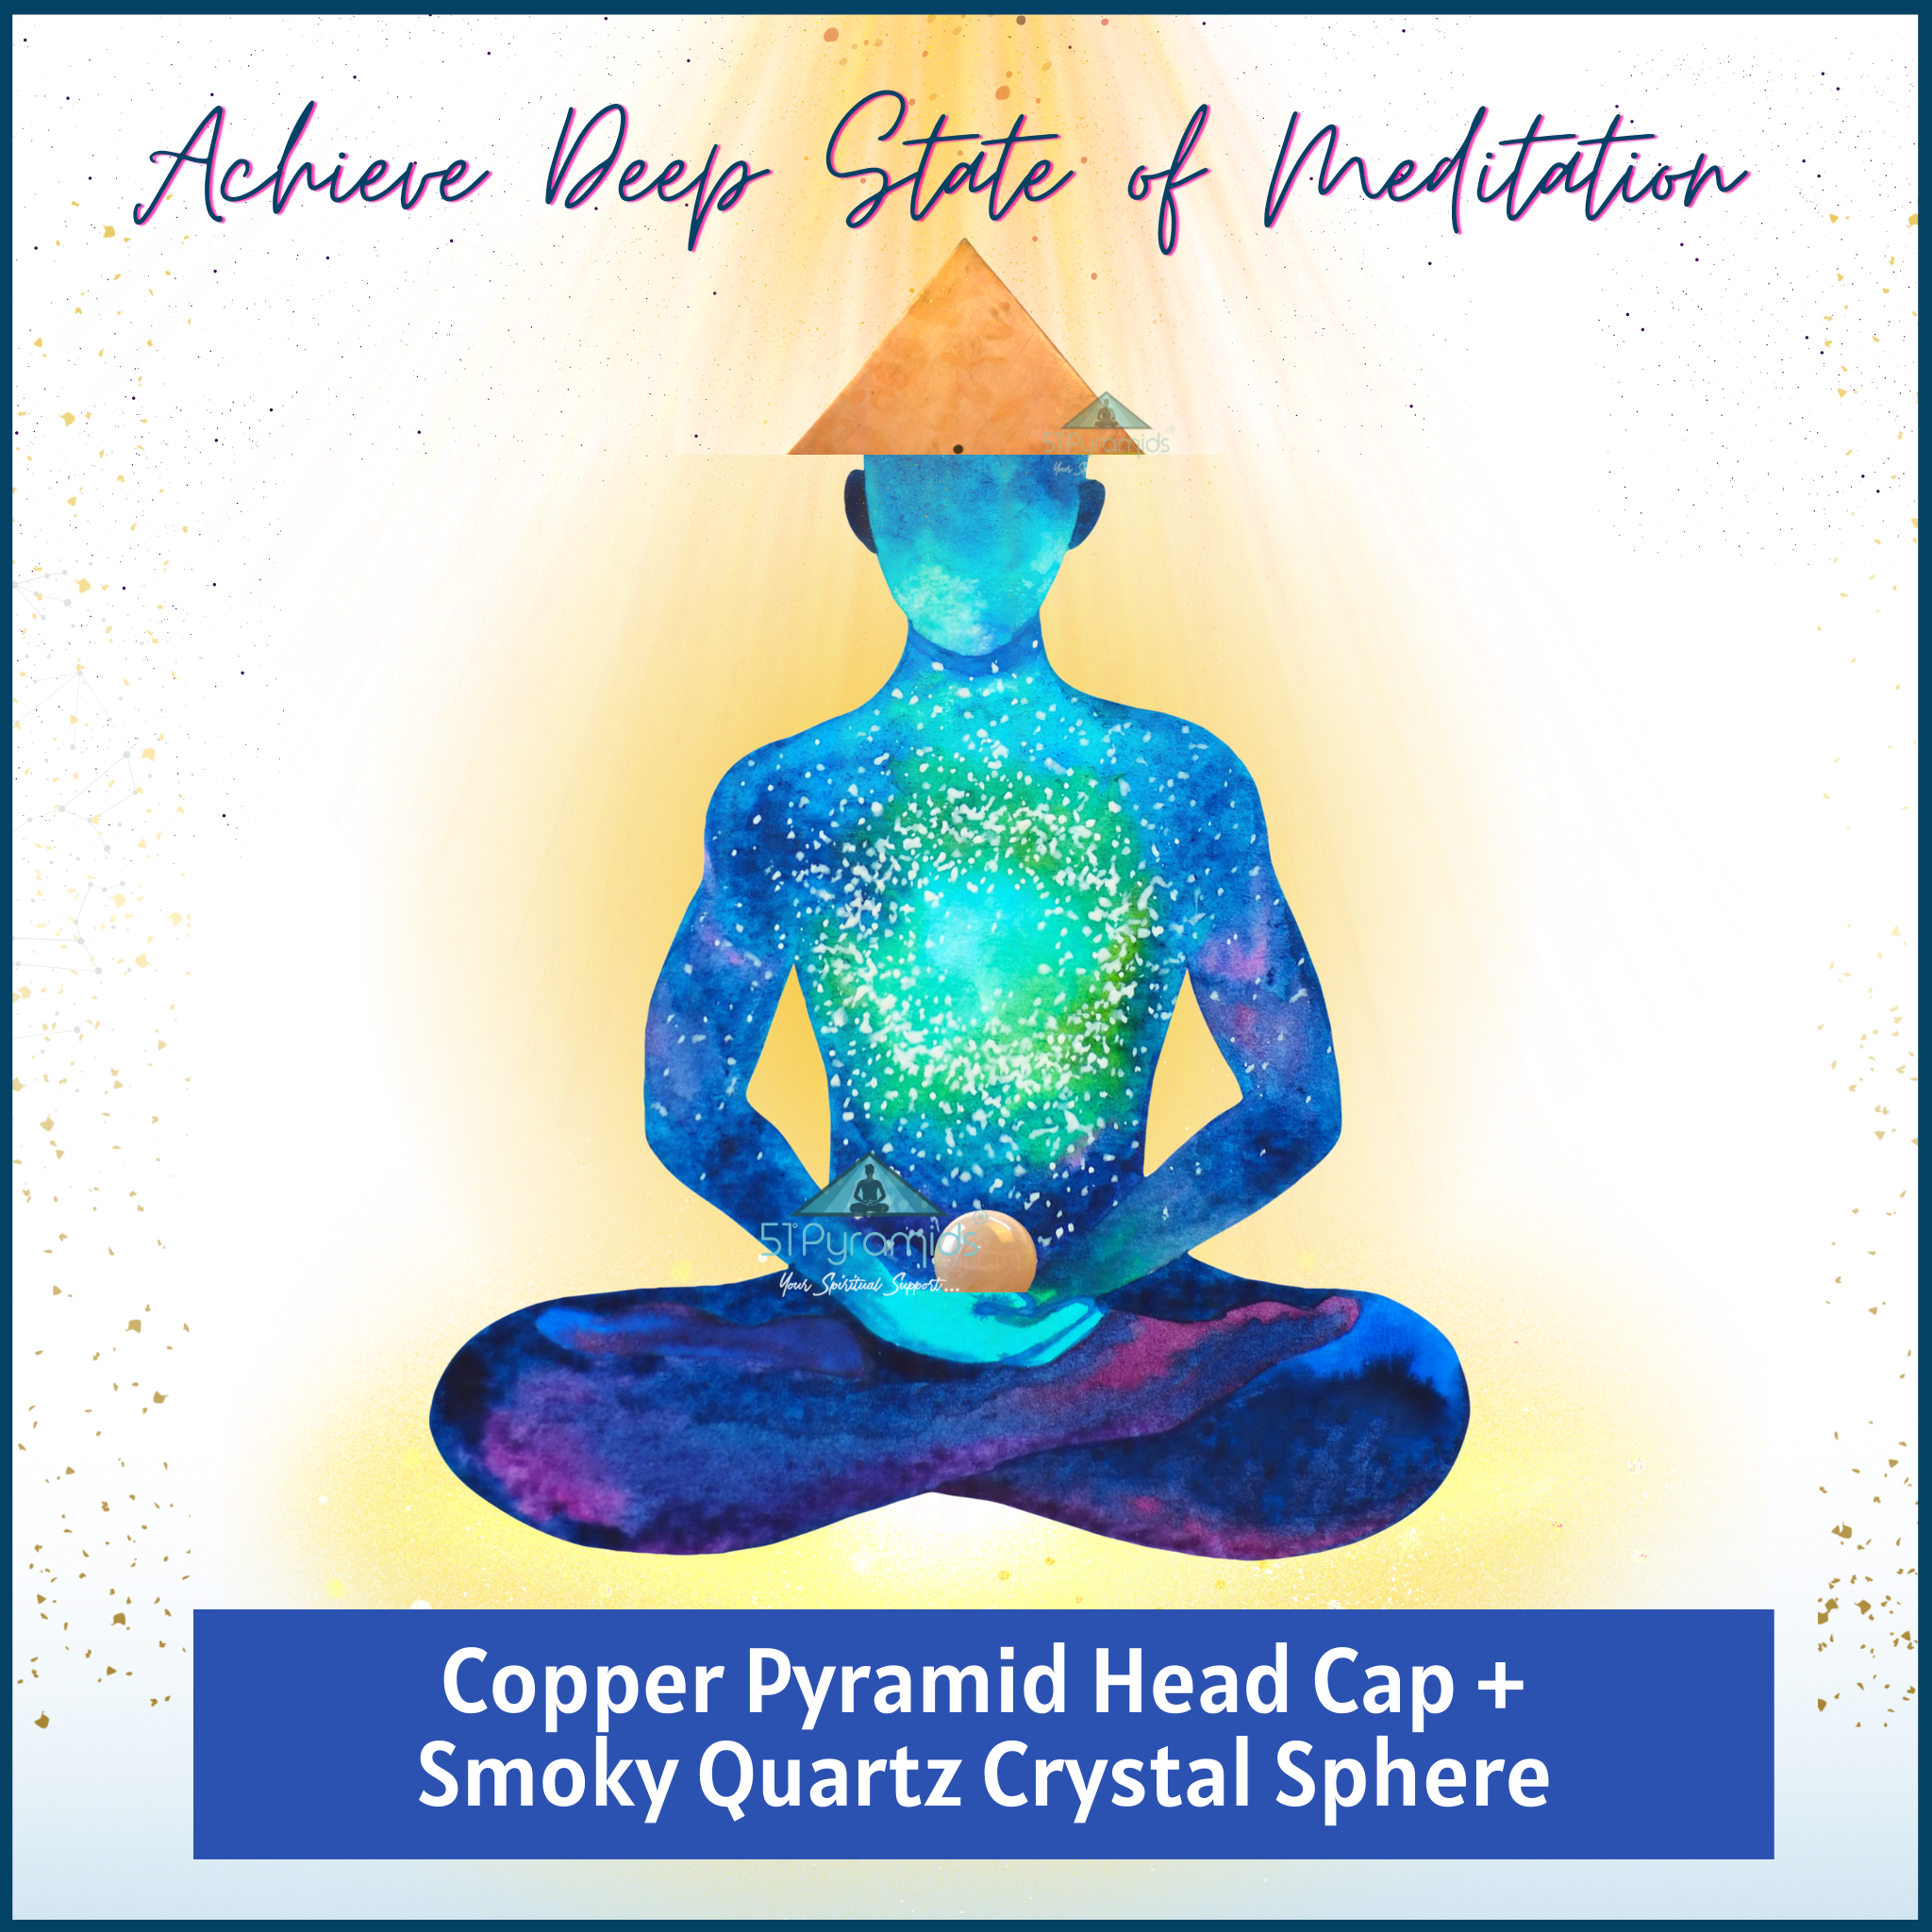 MeditationCombo - Copper Pyramid Head Cap + Smoky Quartz Crystal Sphere for Deep State of Meditation - 0